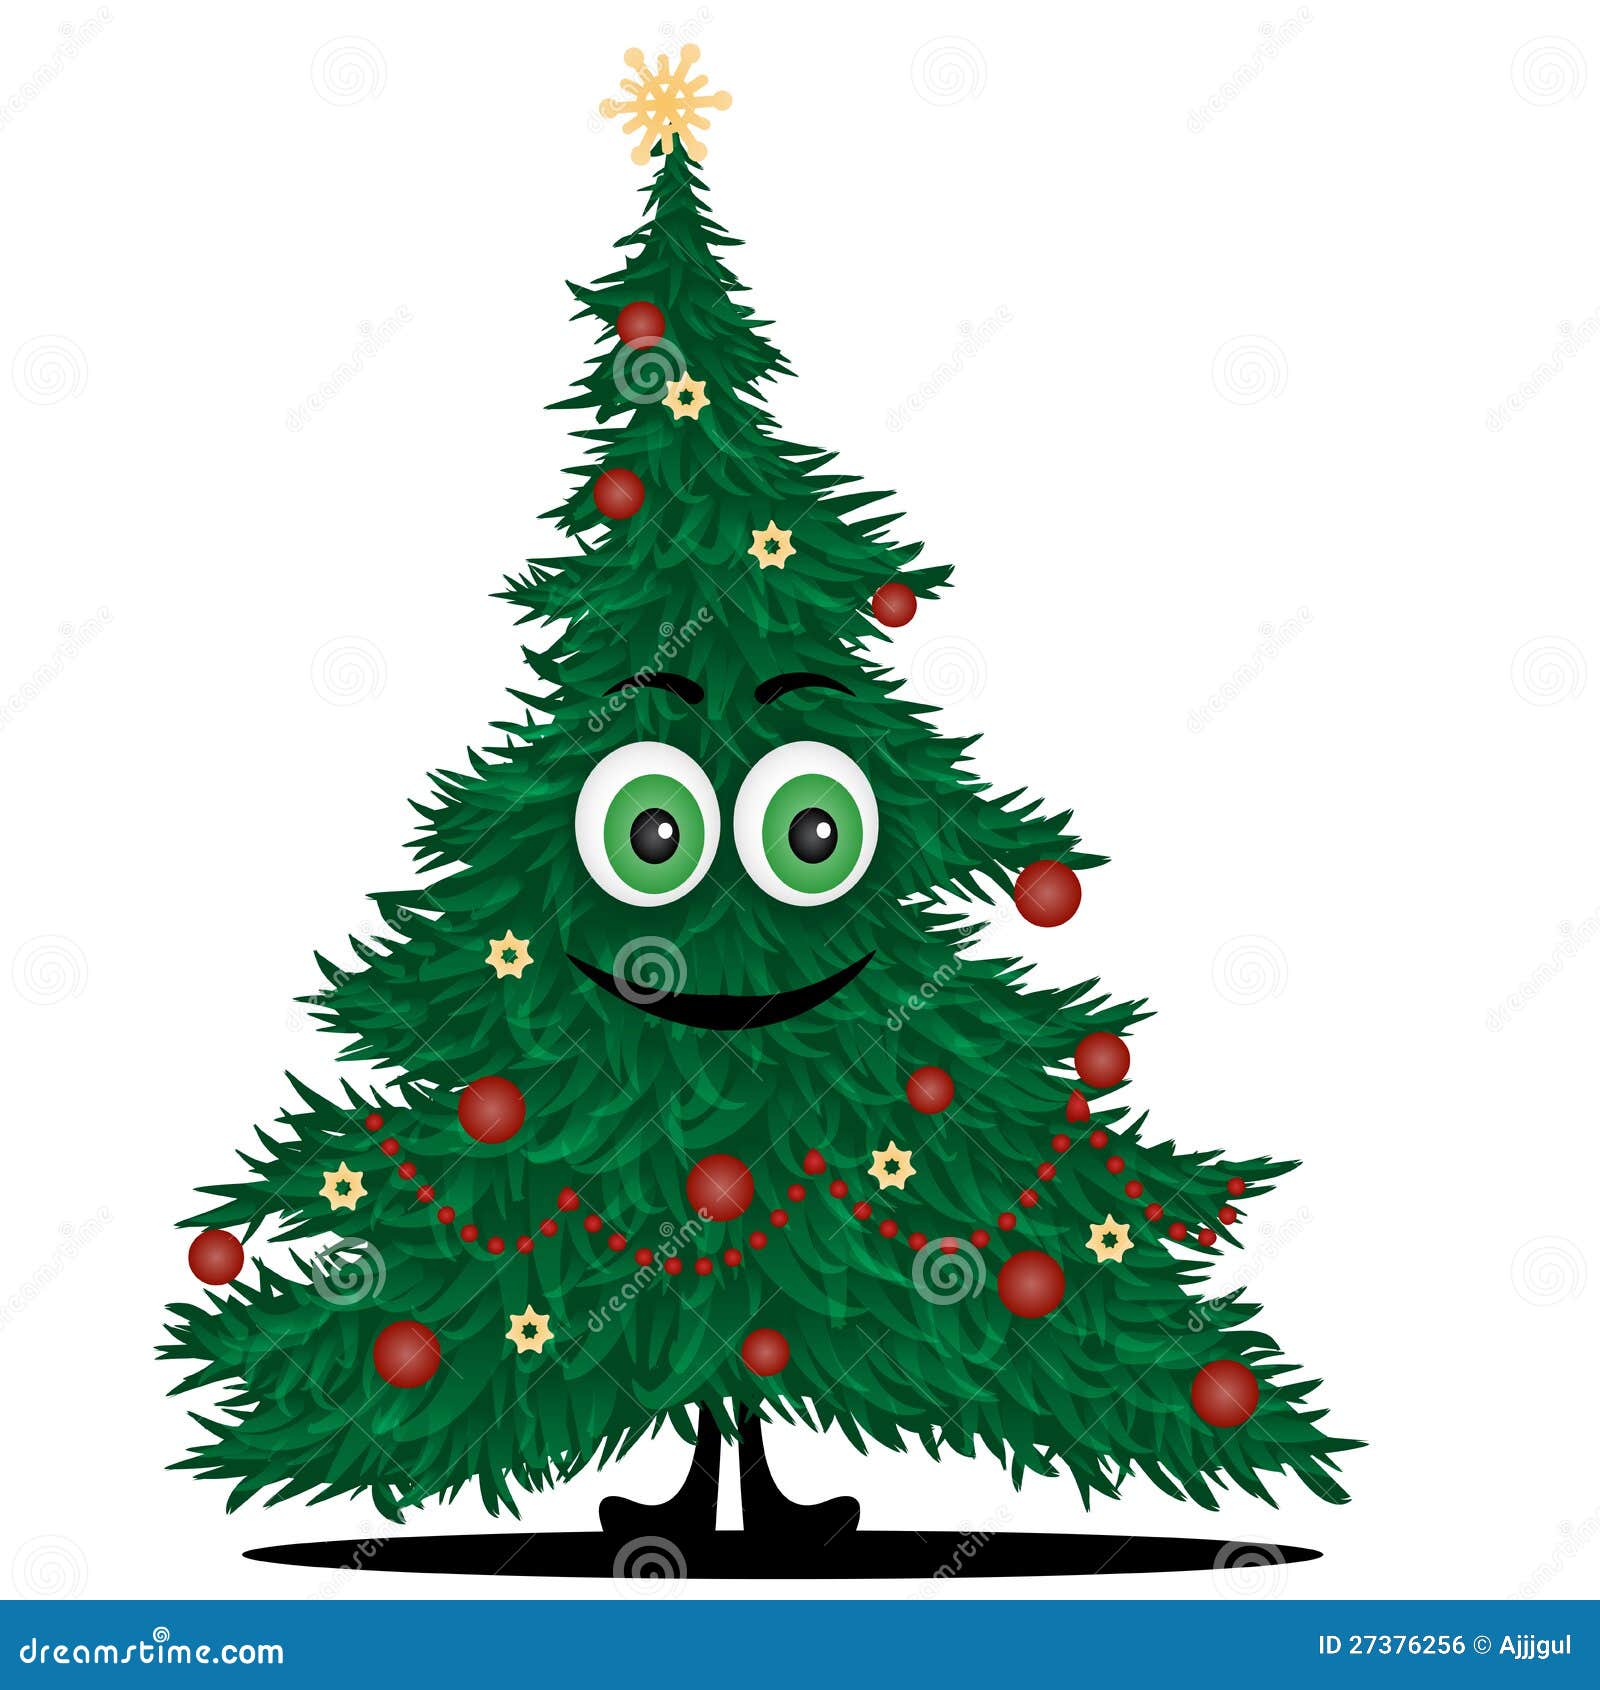 Funny smiling christmas tree cartoon.